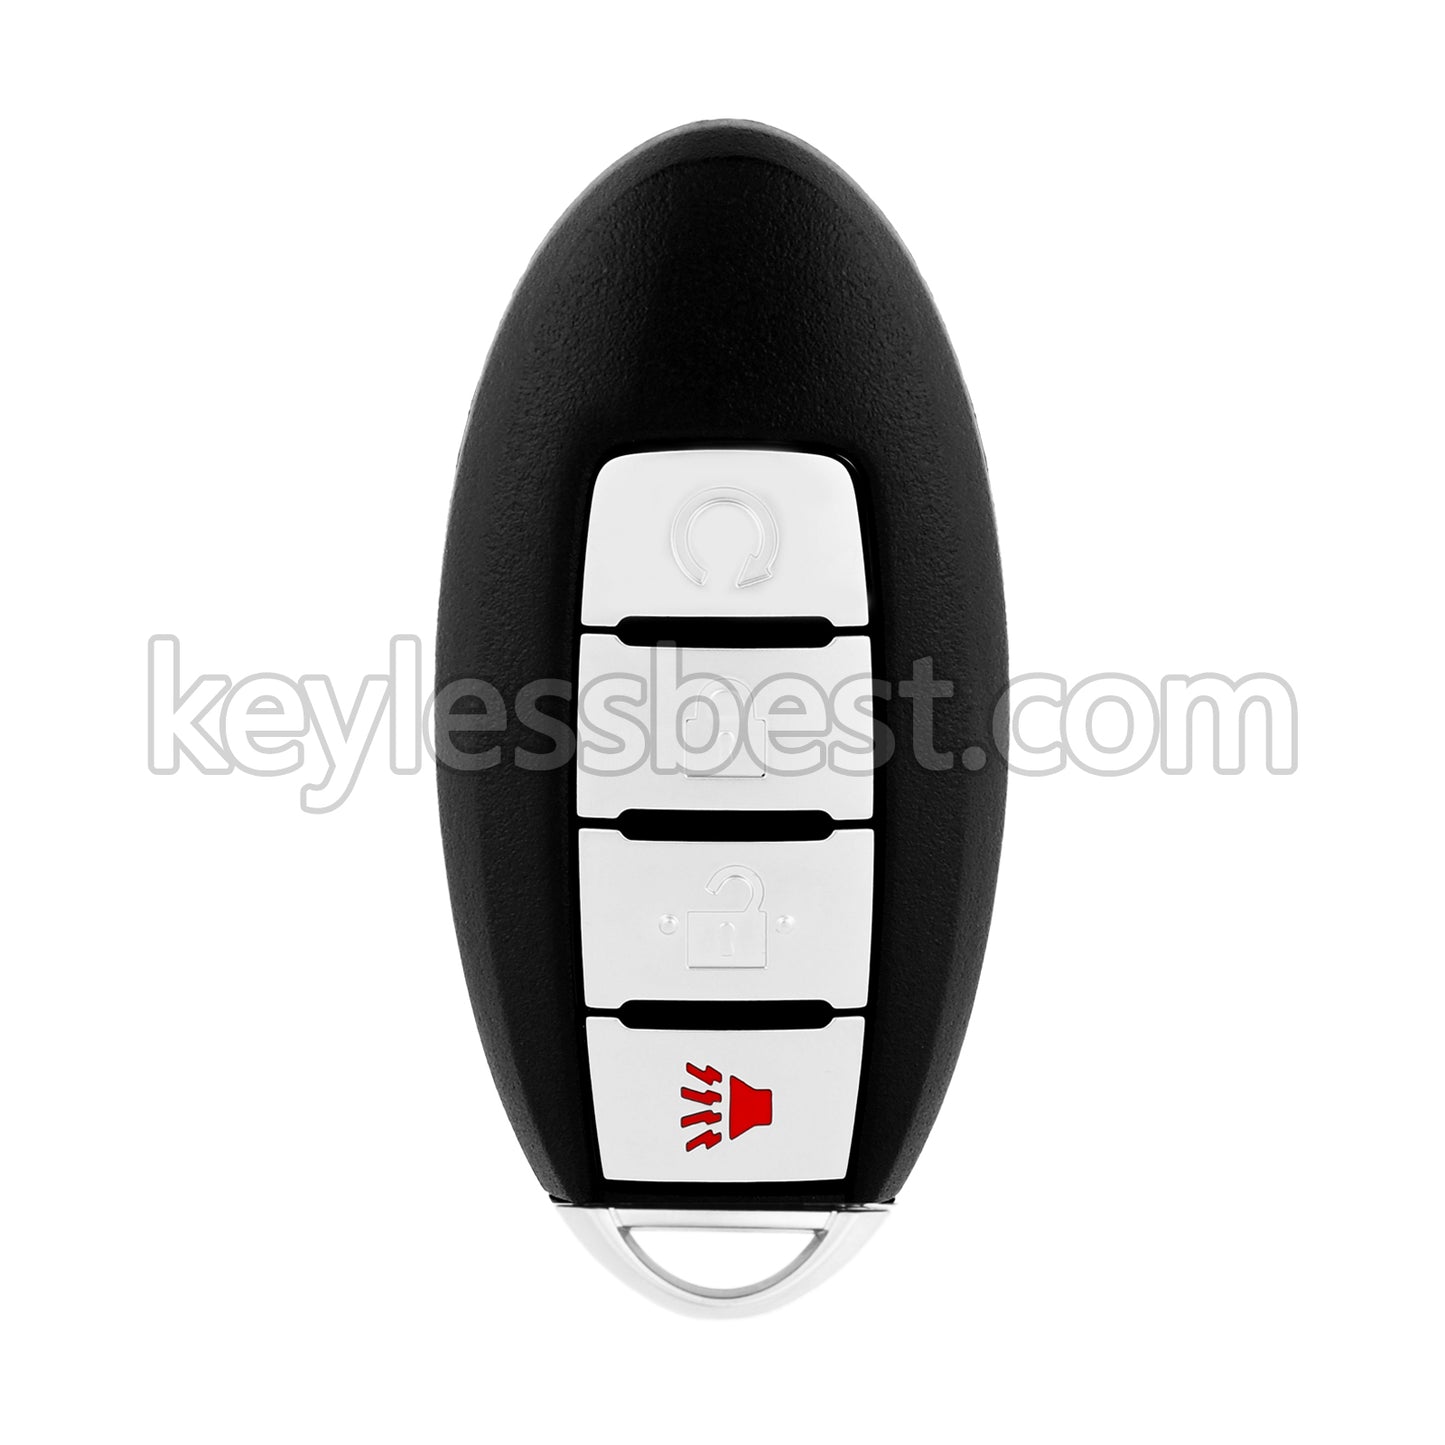 2015 - 2020 Nissan Murano SV Titan Pathfinder / 4 Buttons Remote Key / KR5S180144014 / 433MHz